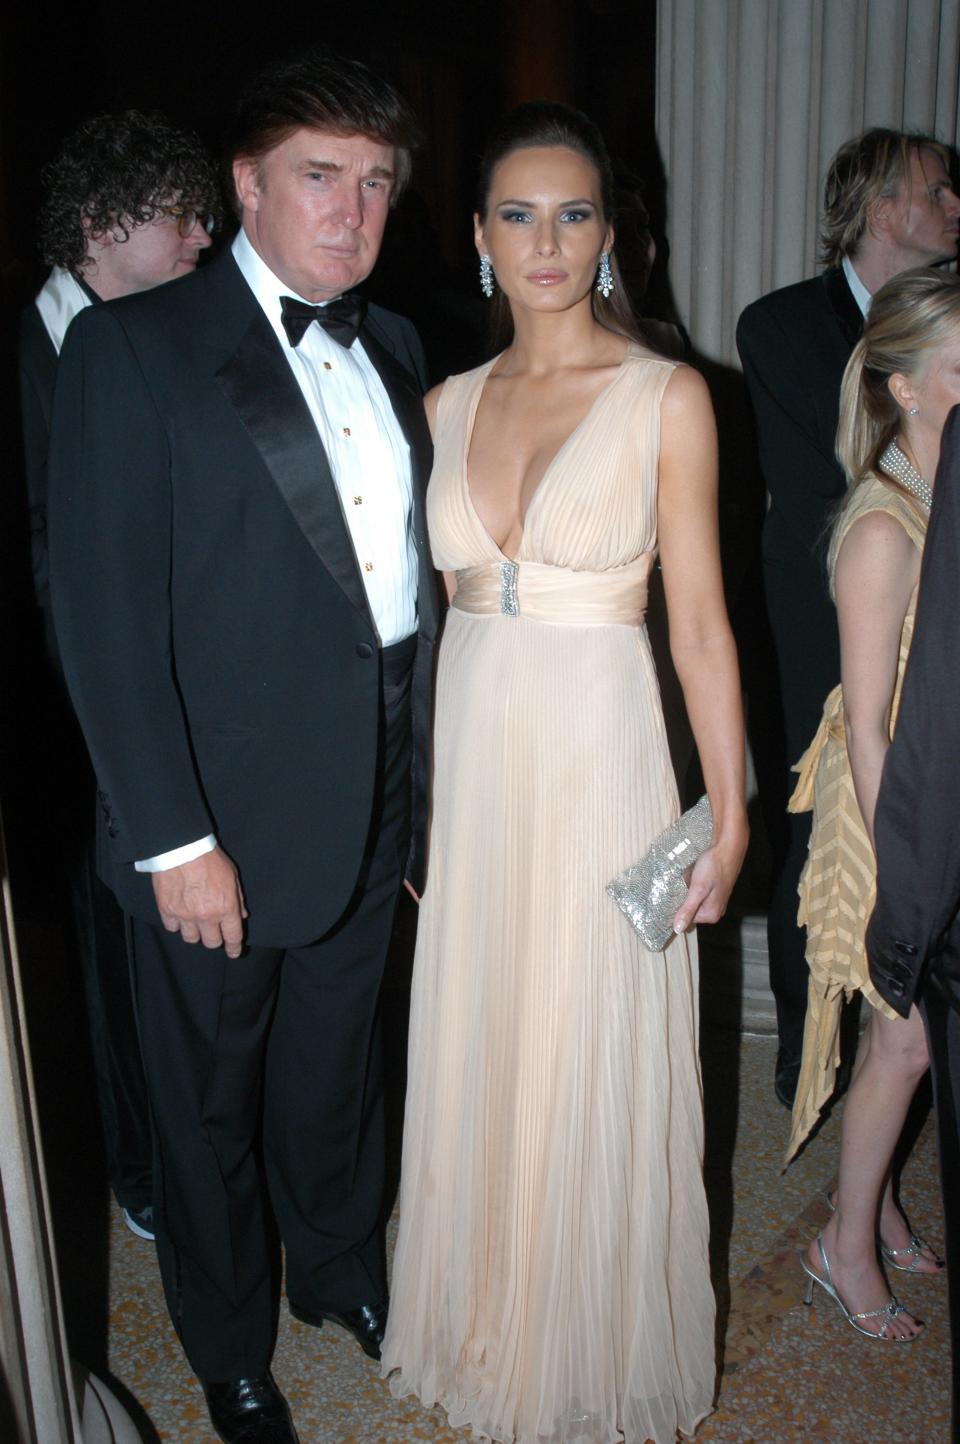 Donald Trump and Melania at the Met Gala in 2003